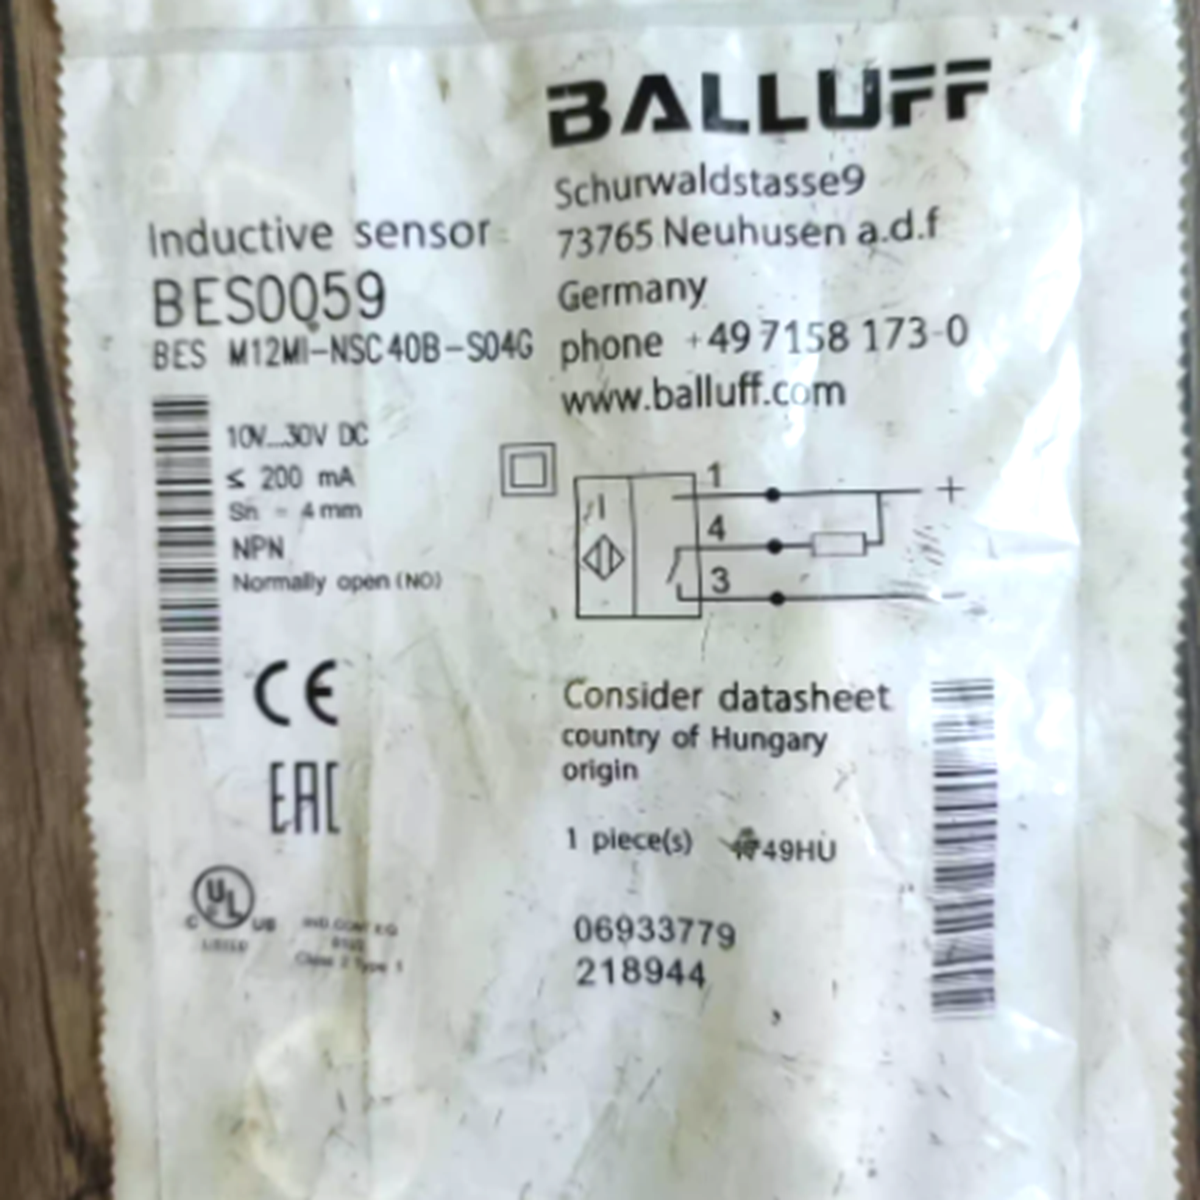 BALLUFF BES M12MI-NSC40B-S04G Proximity Switch 10...30V DC 200mA 4.0